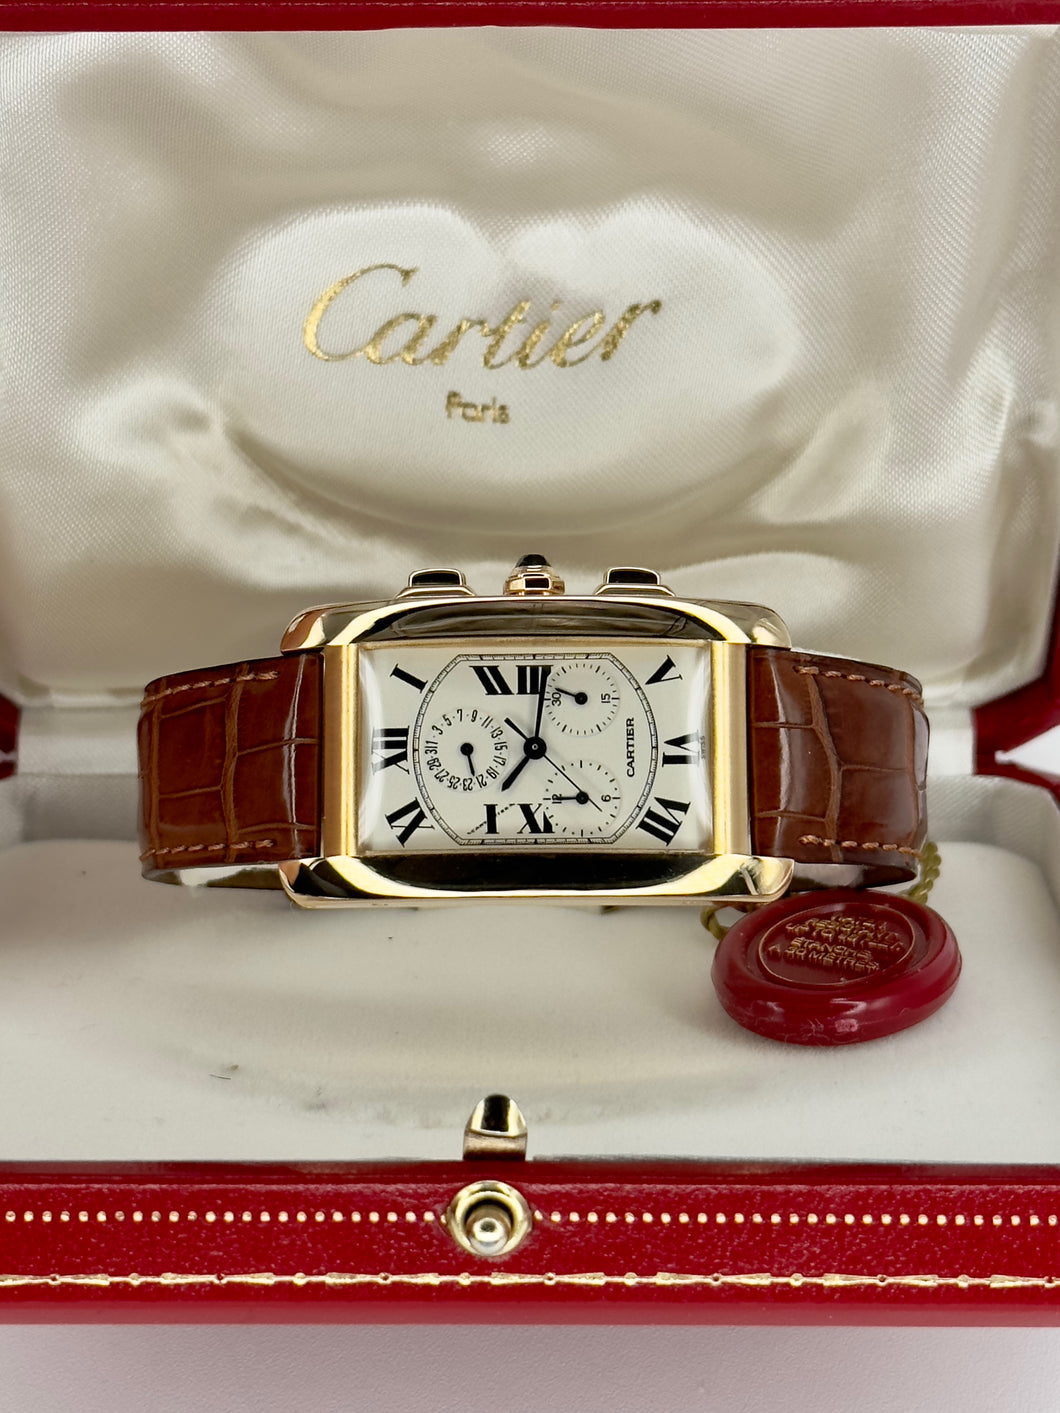 Cartier Tank Américaine Chronoreflex yellow gold ref. W2601156 year 1996 full set